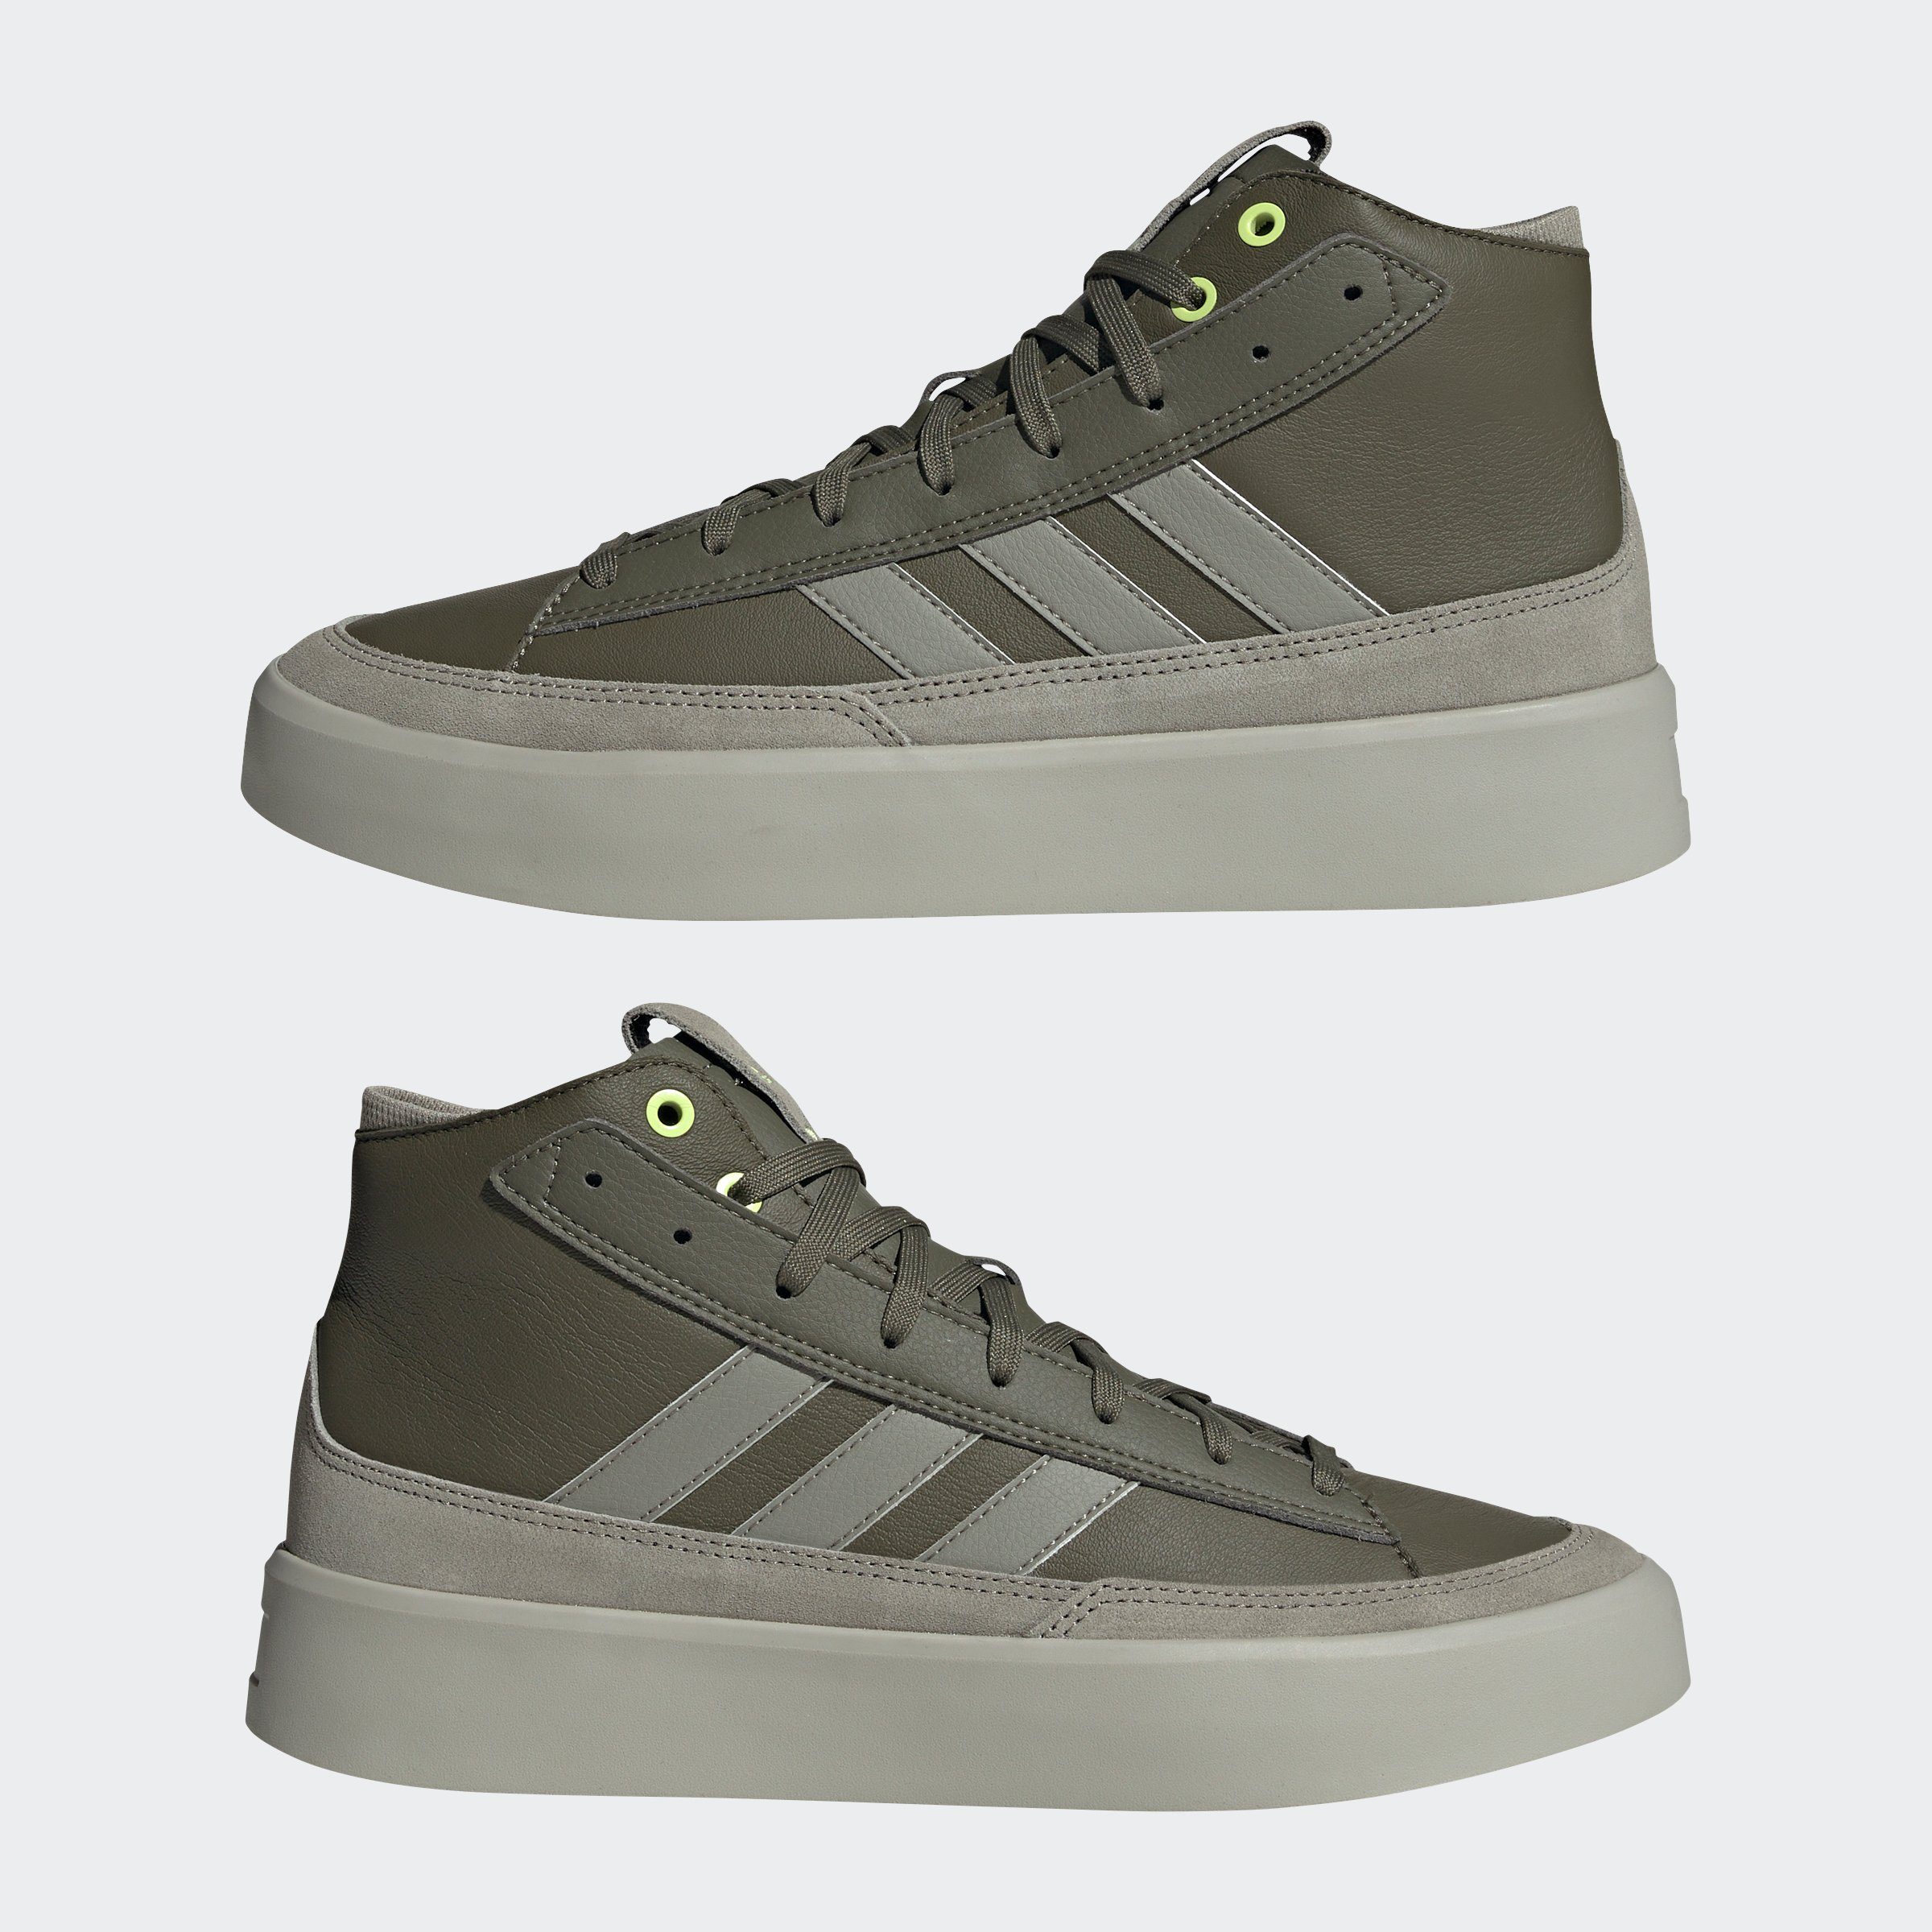 / Silver Olive Pebble ZNSORED / Lime Pulse Sportswear Strata Sneaker HI adidas